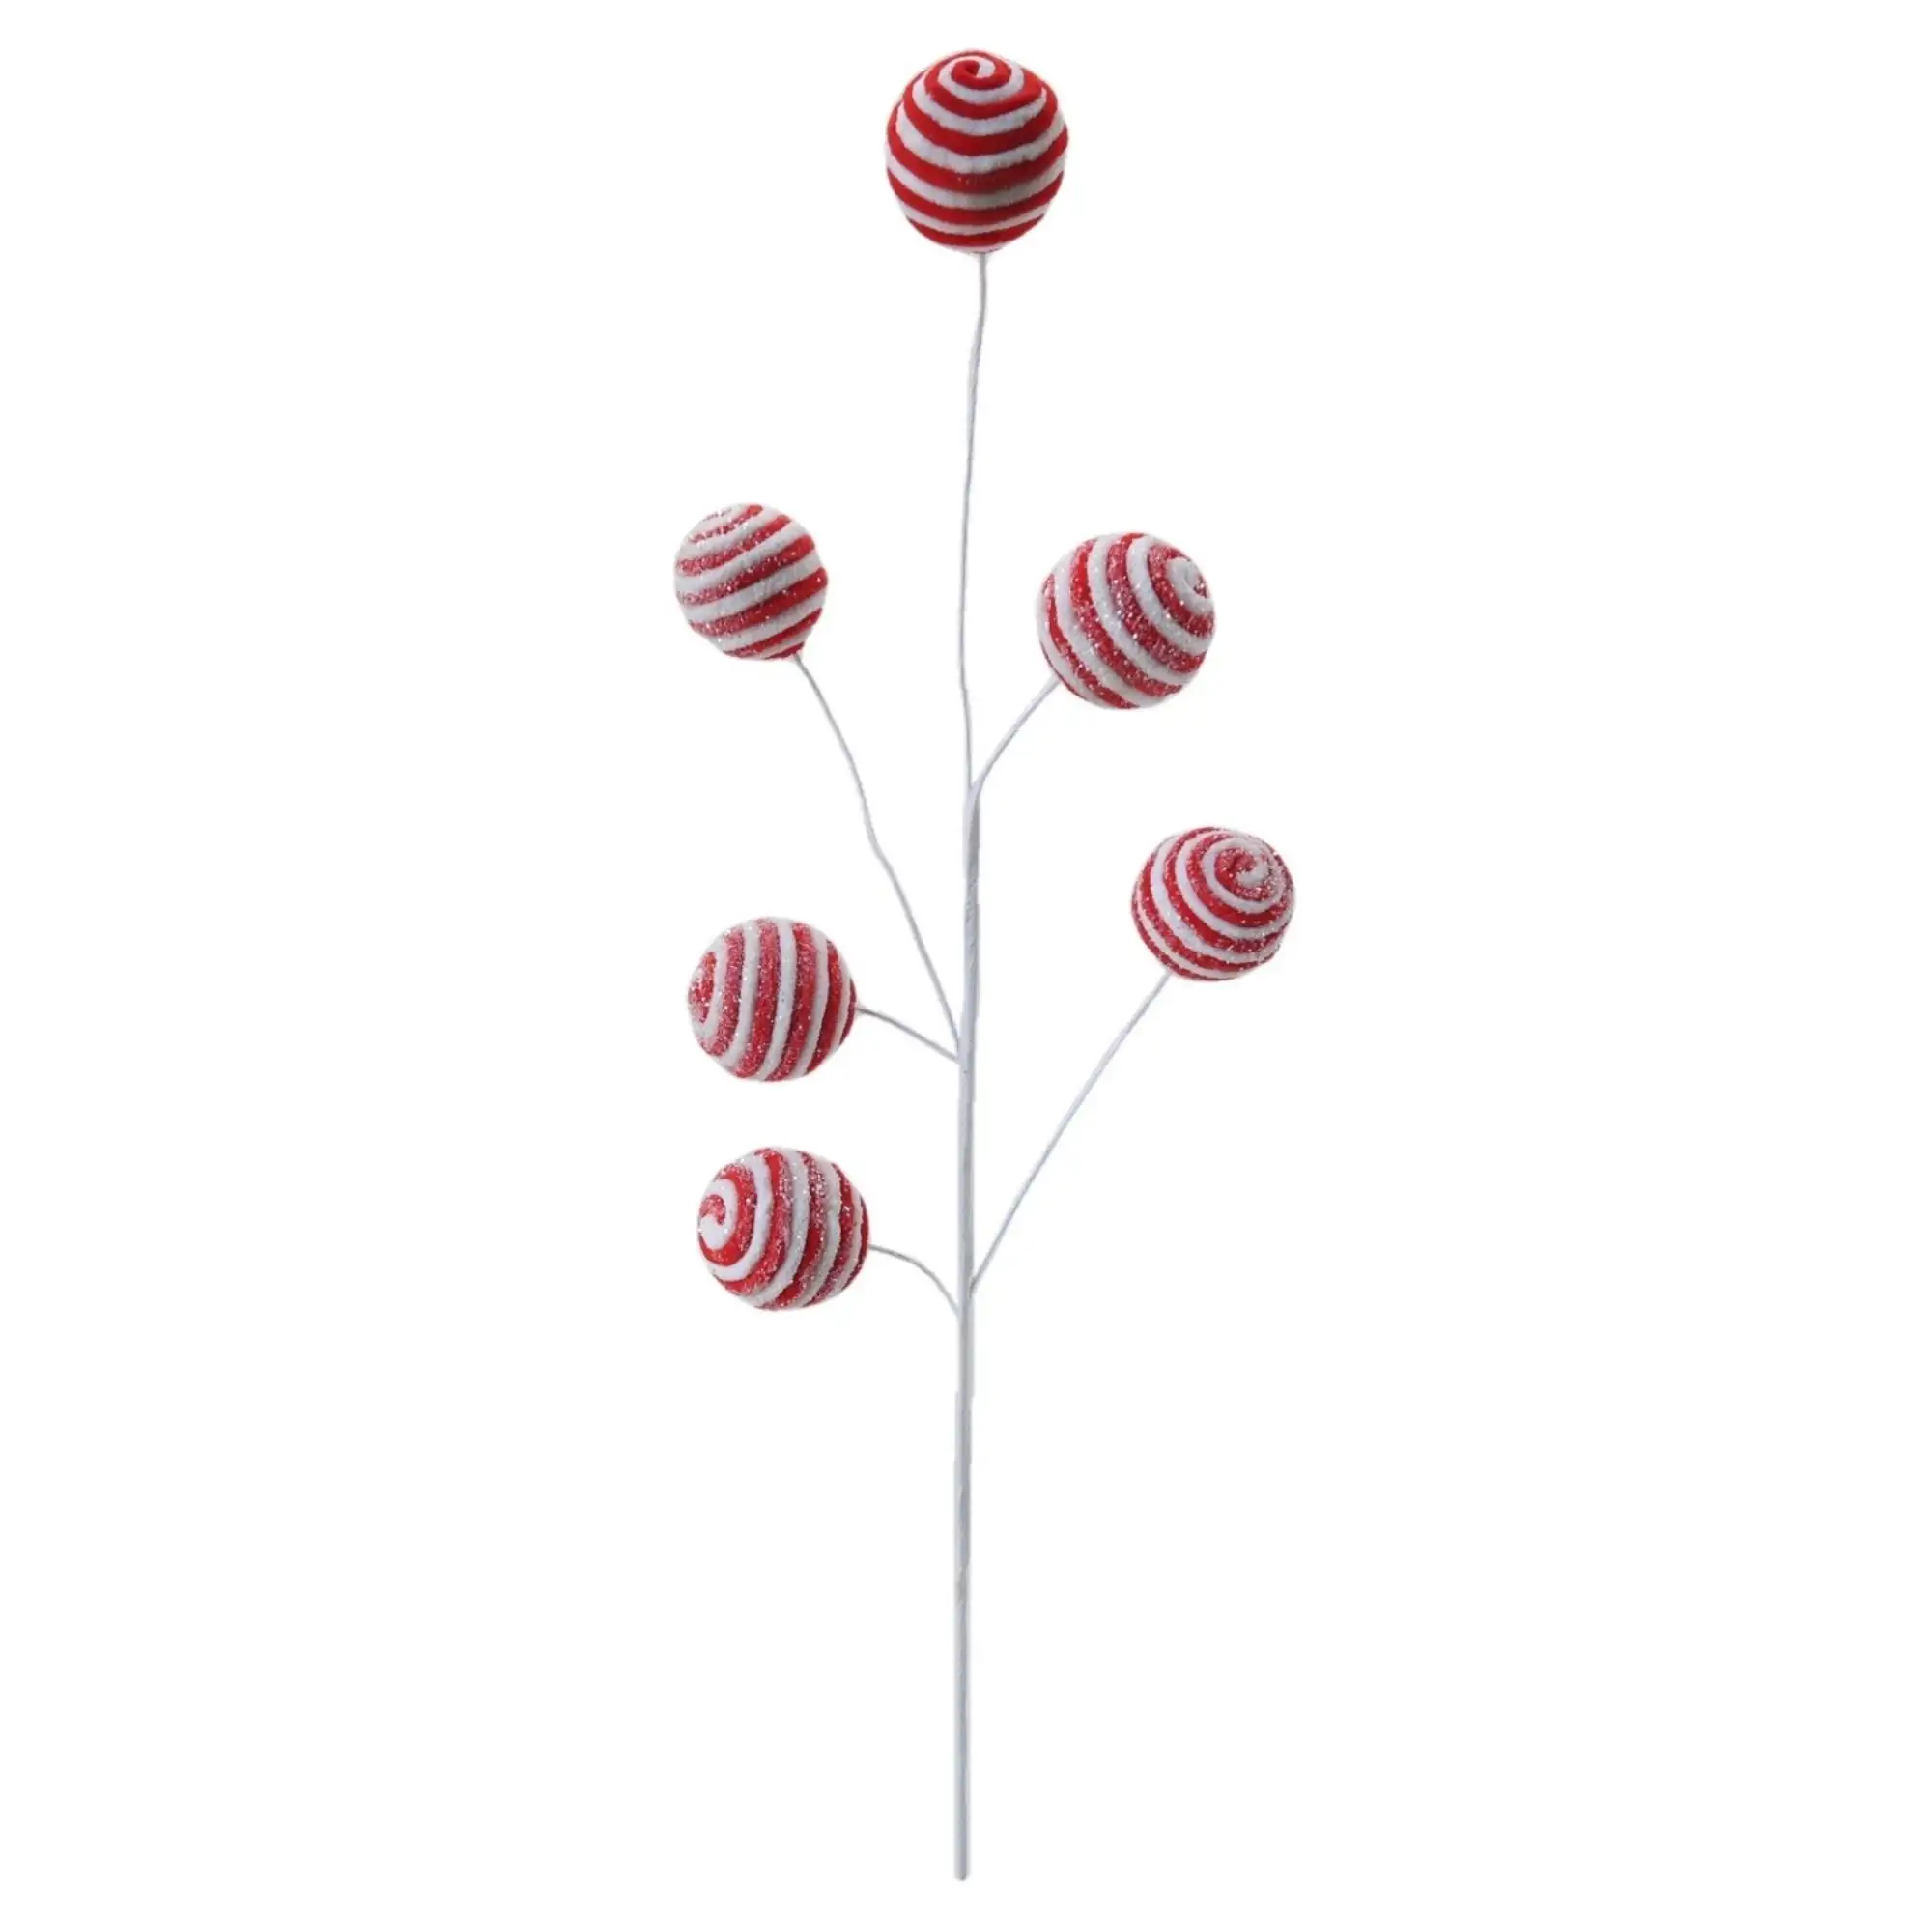 Xmas Wreath Tree Decoration Candy Lollipop Picks Handmade Felt Ornament Red White Ball Bauble Glitter Christmas Candy Branch